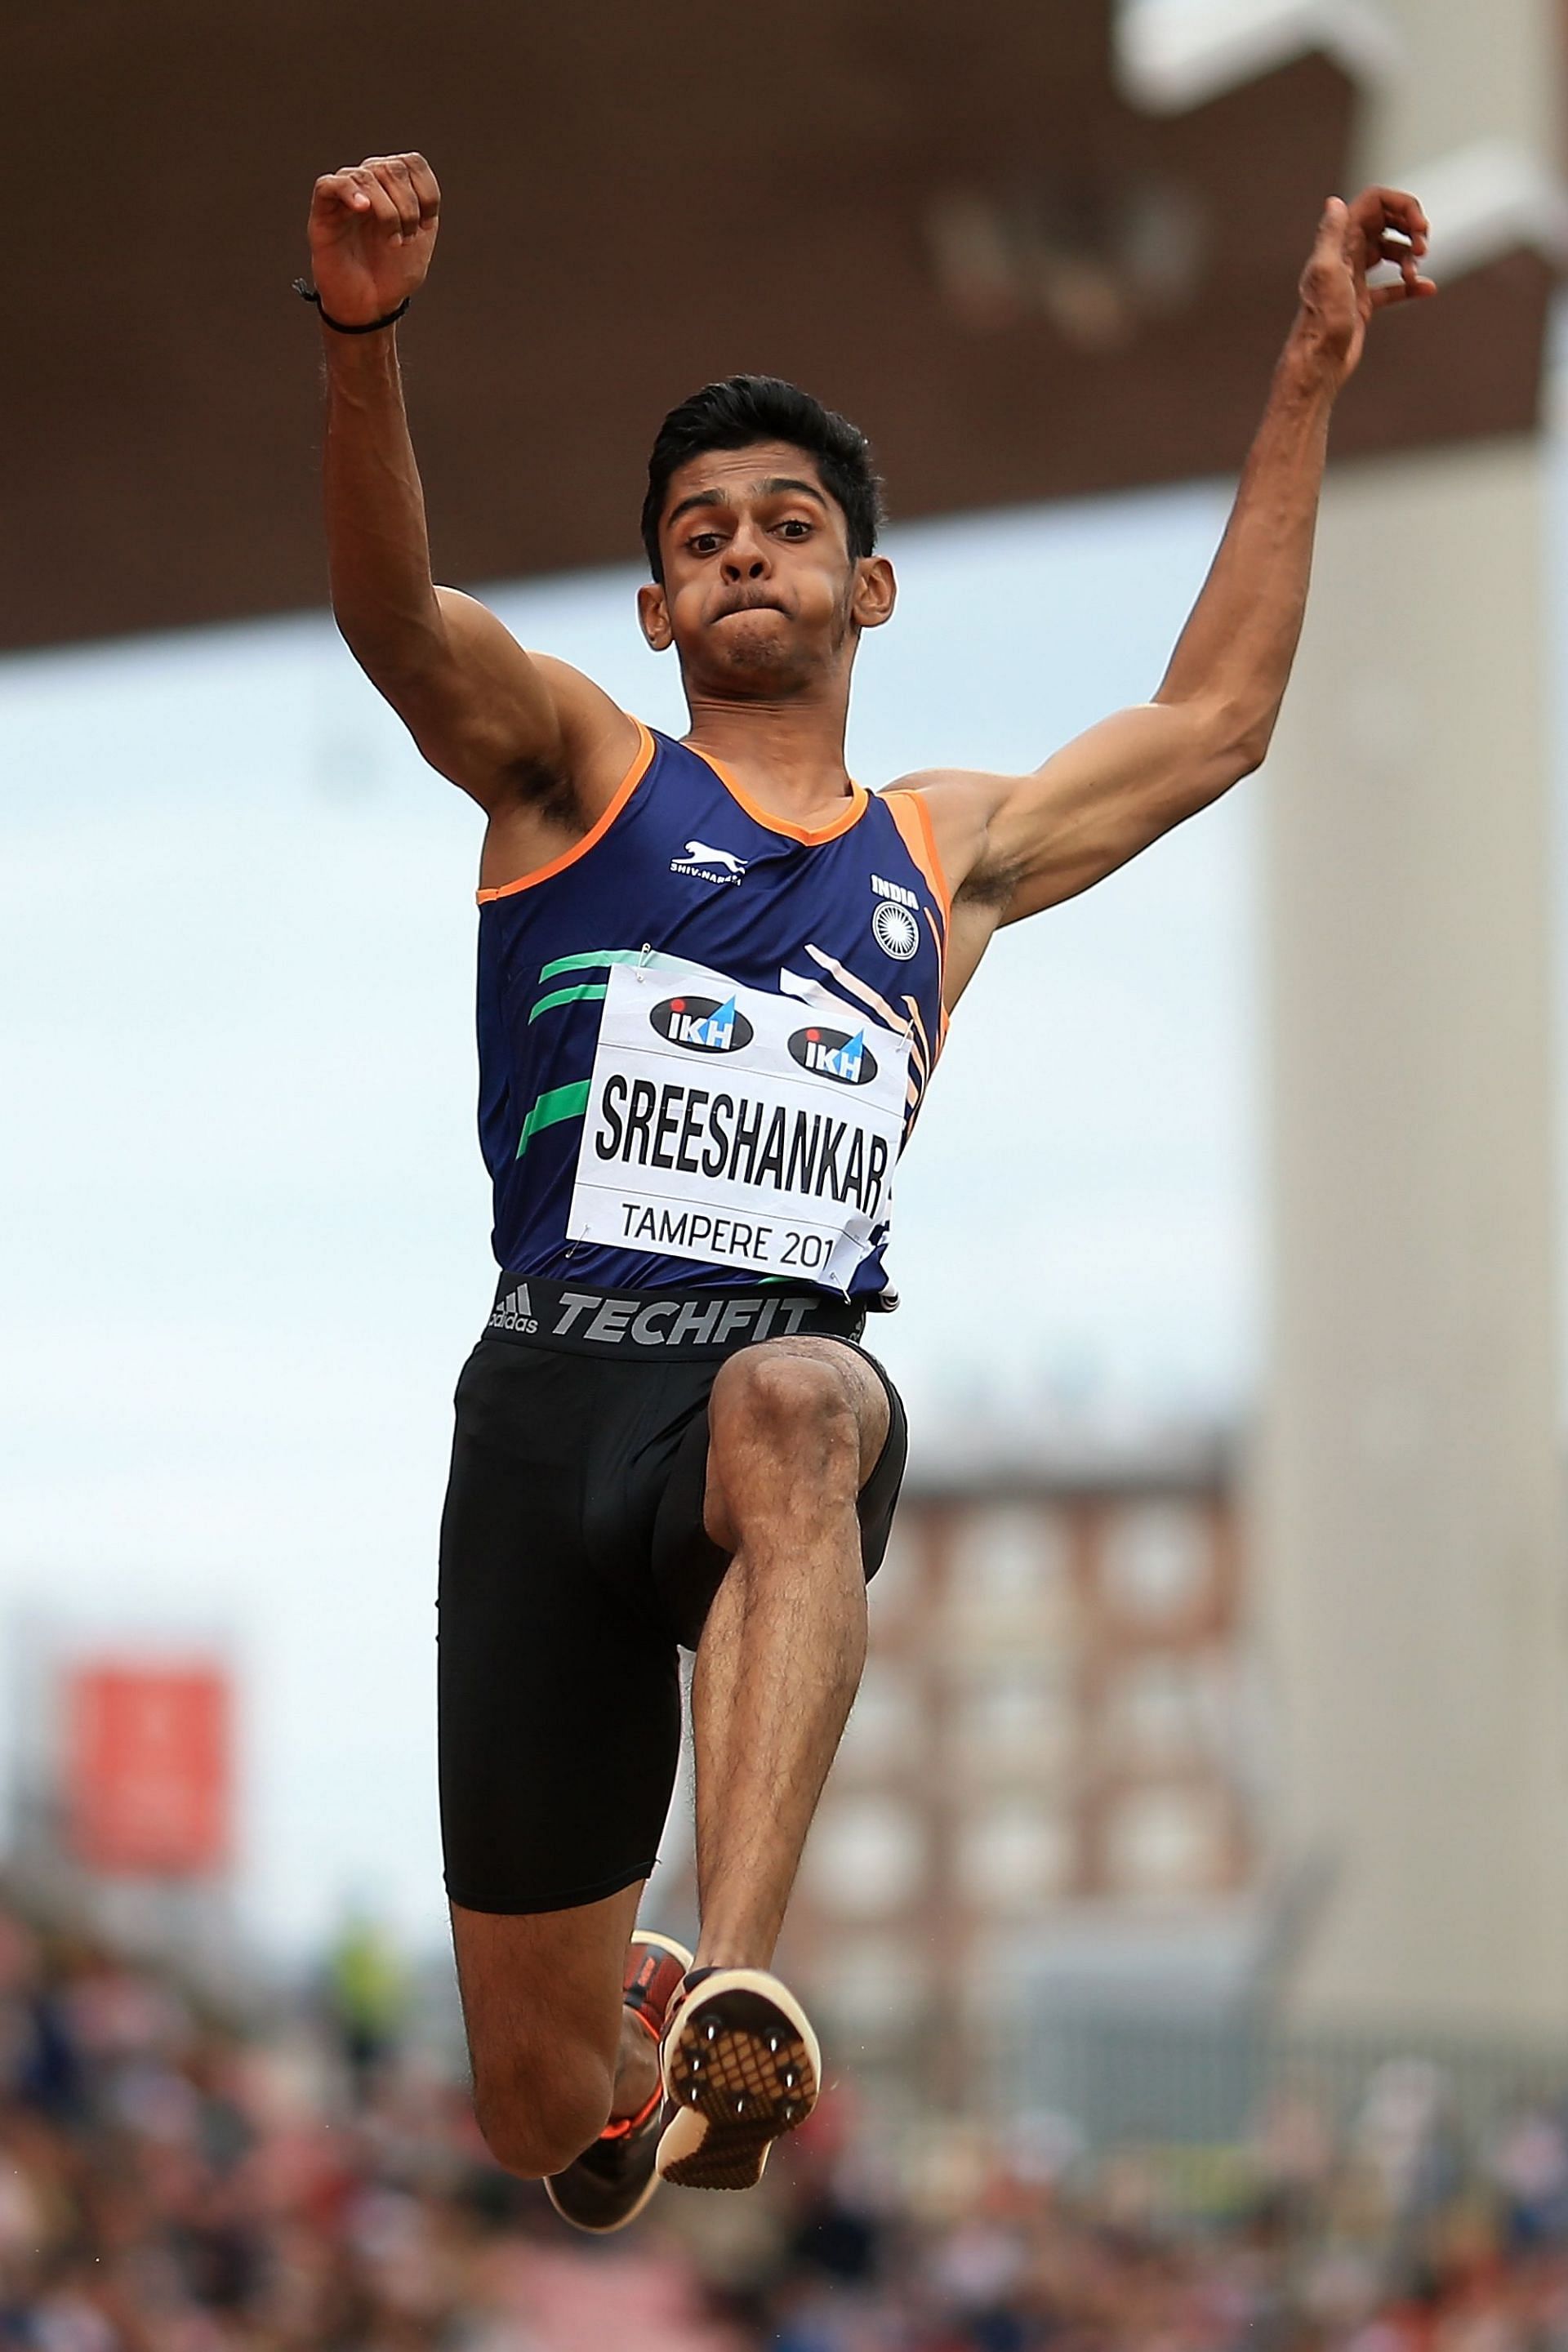 Indian athlete Murali Sreeshankar. (PC: Getty Images)